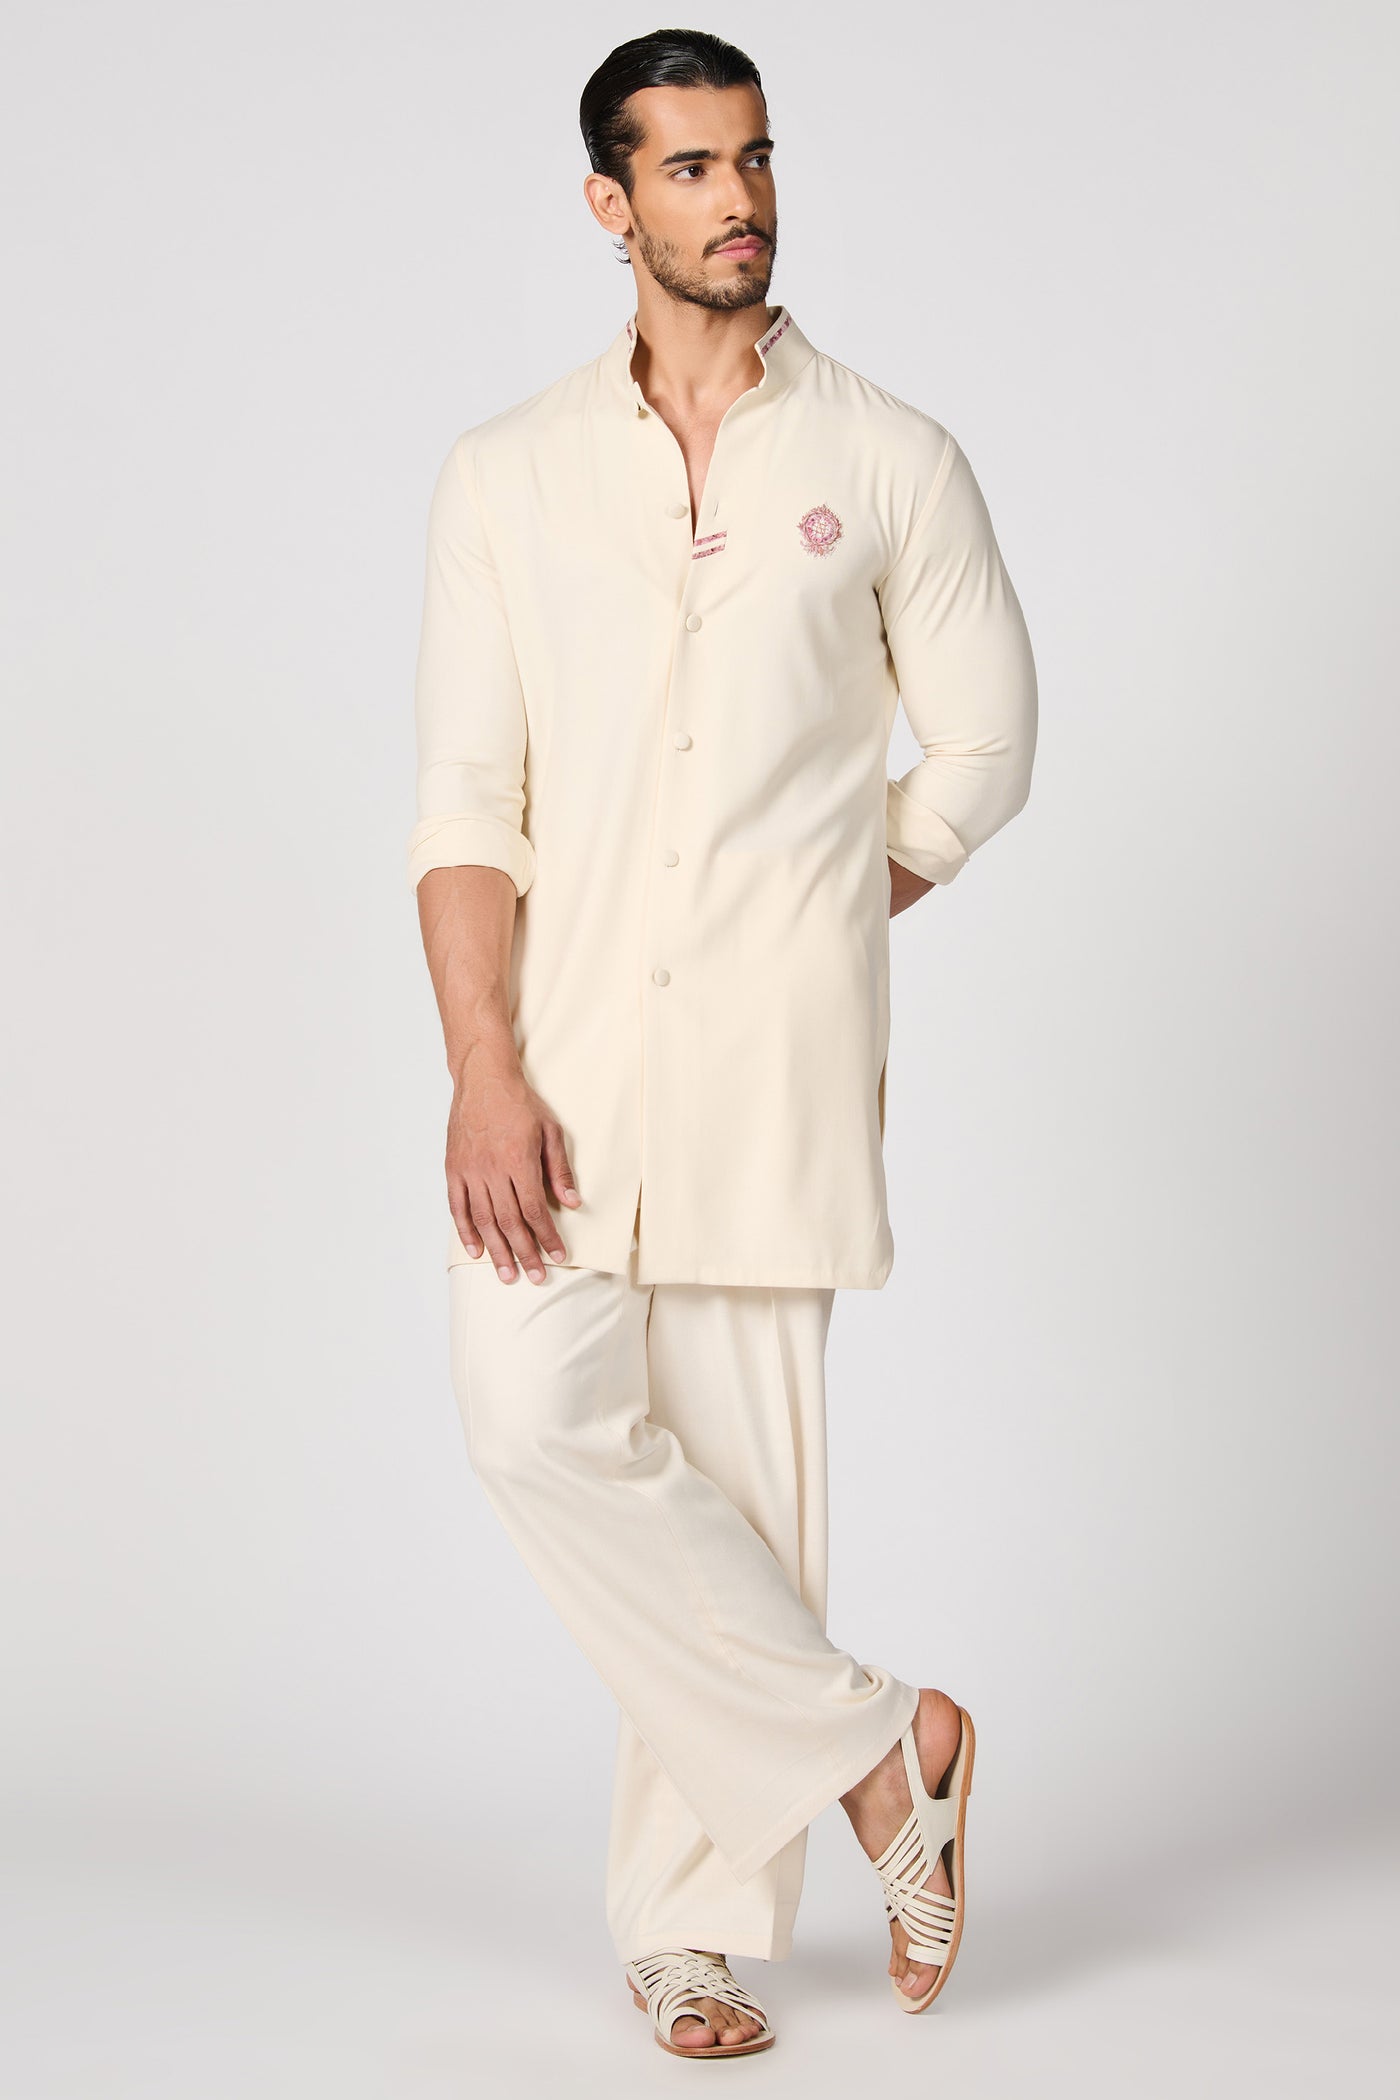 Shantanu & Nikhil Menswear Off-White Crested Shirt Kurta indian designer wear online shopping melange singapore